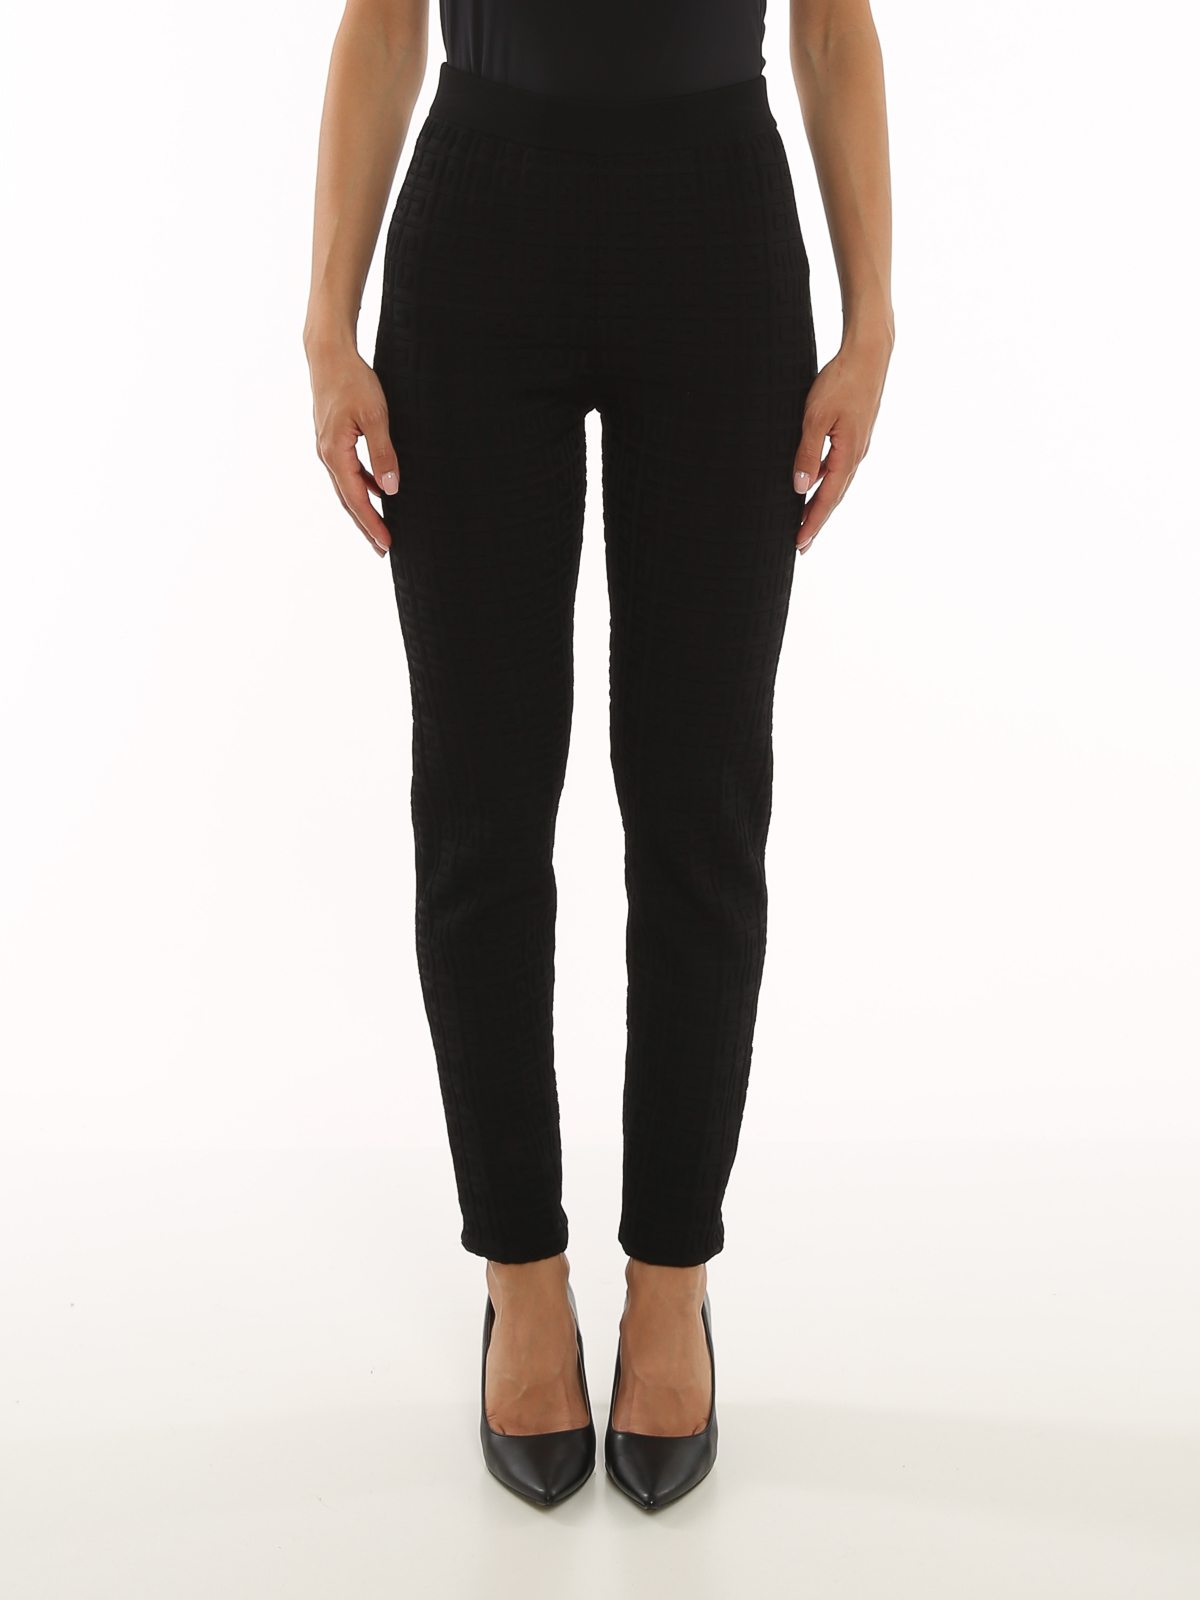 Leggings Givenchy - 4G leggings - BW50RJ4ZA4001 | Shop online at iKRIX